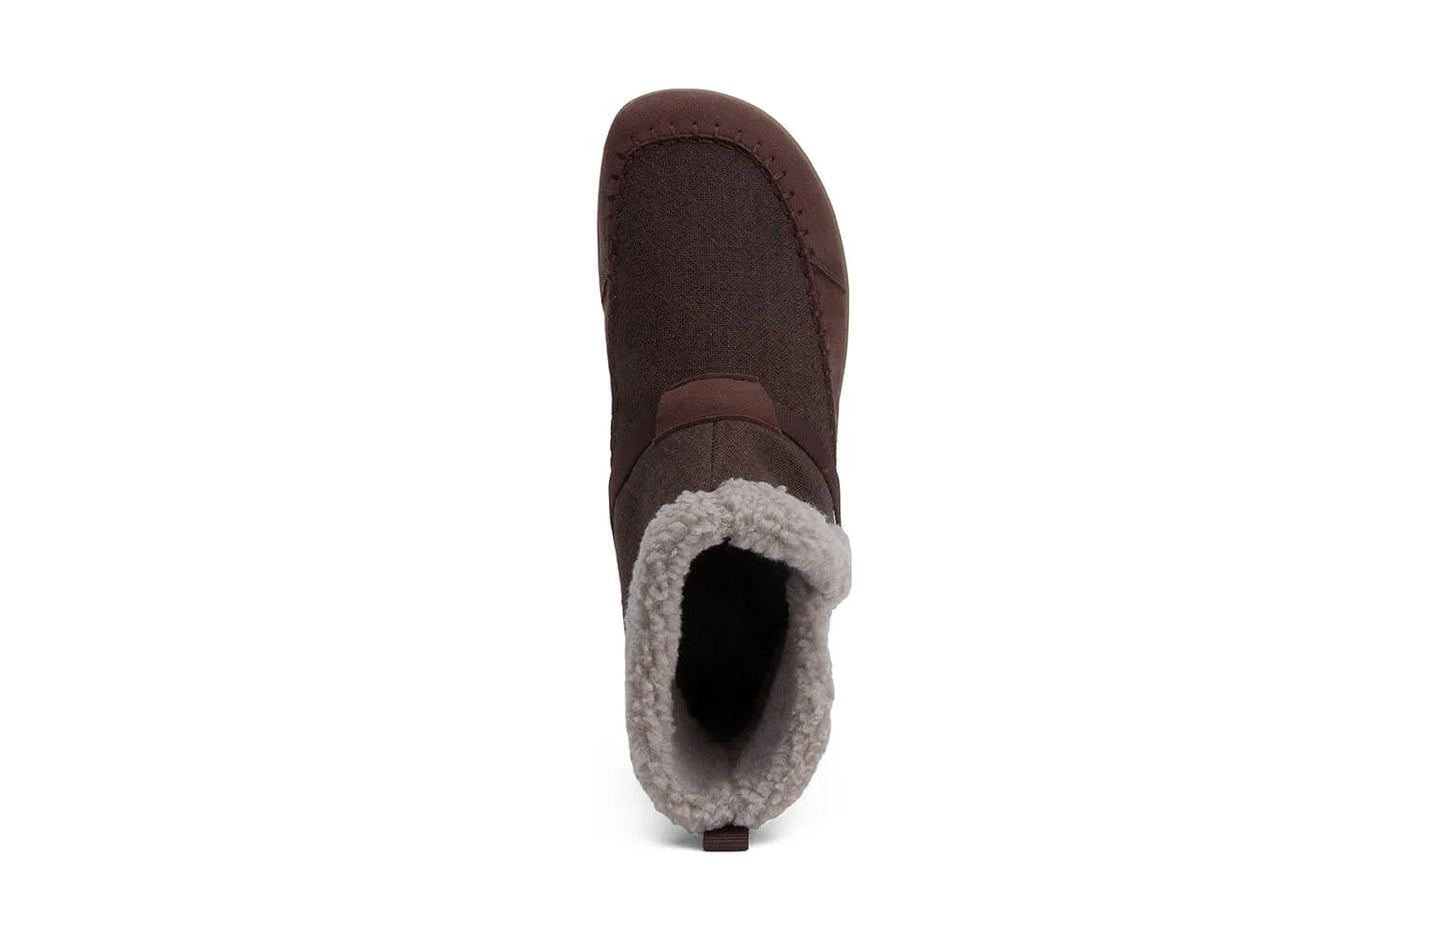 Xero Shoes - Ashland Java Brown - botines barefoot de invierno